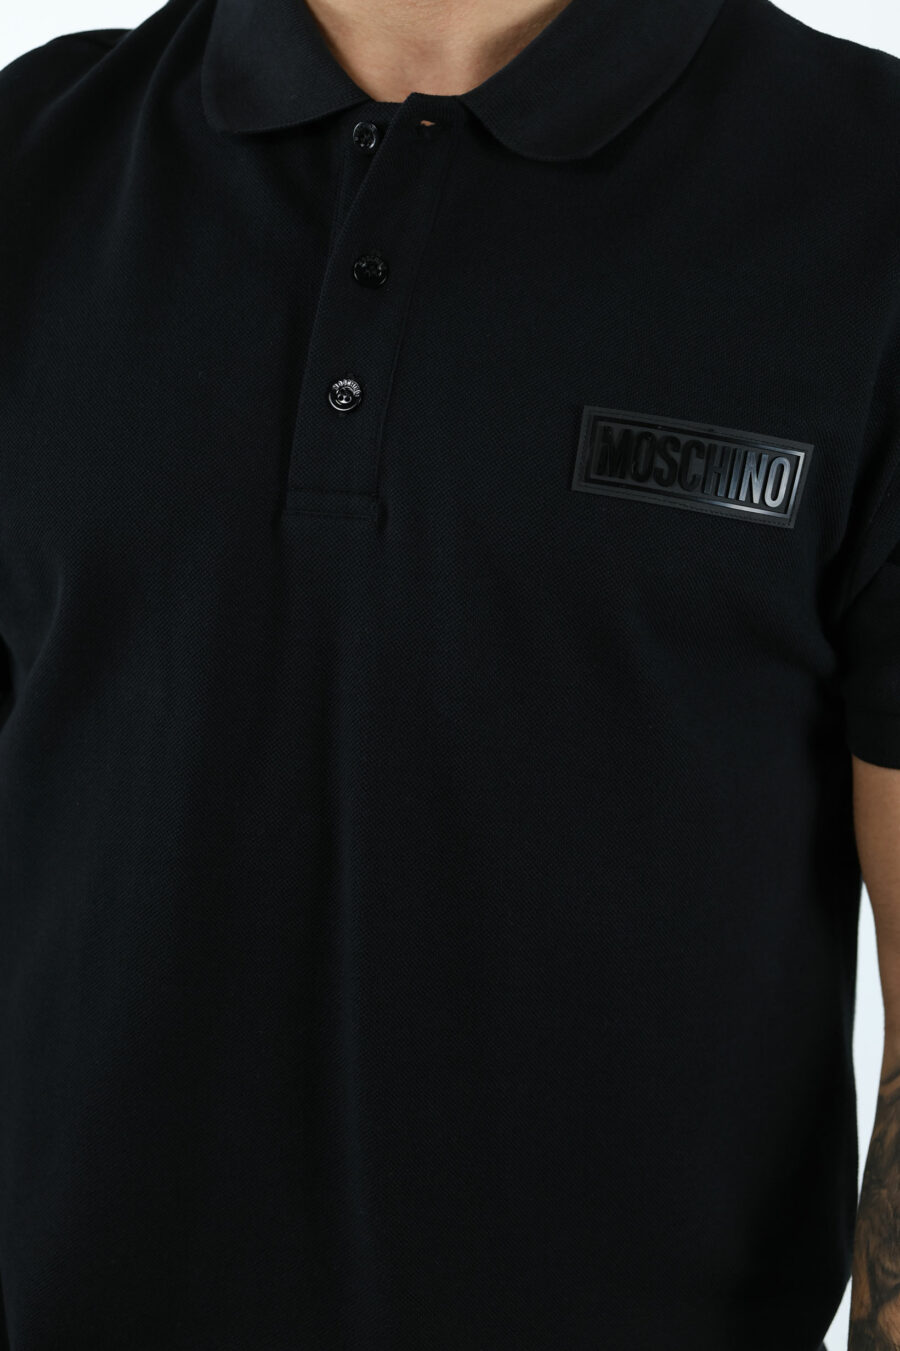 T-shirt preta com etiqueta branca minilogue - 106966